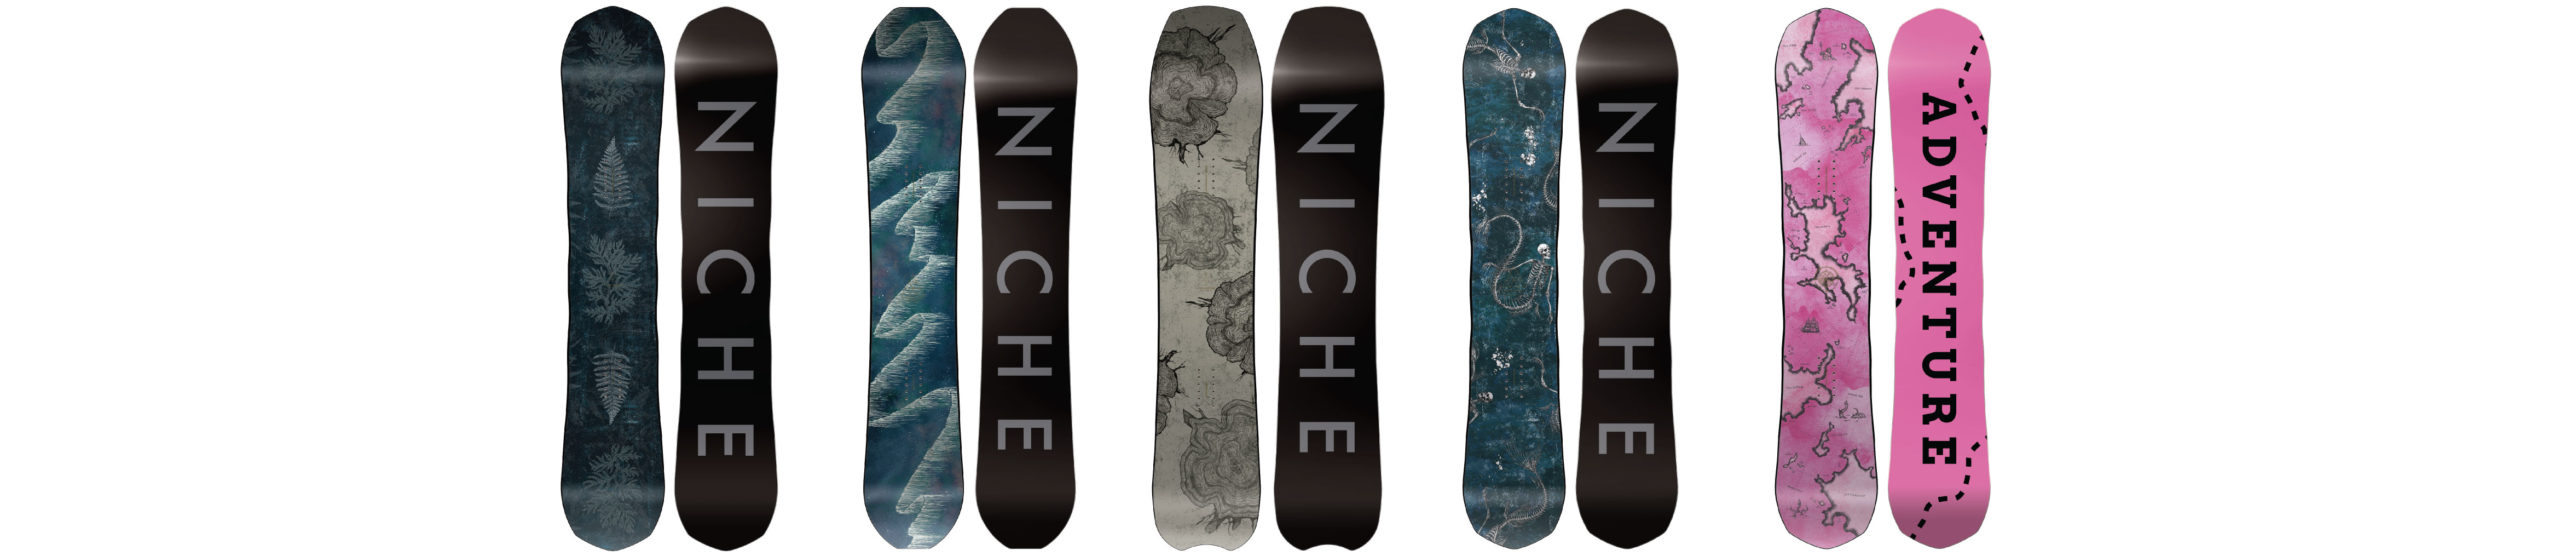 2020/21 Niche Snowboards graphics